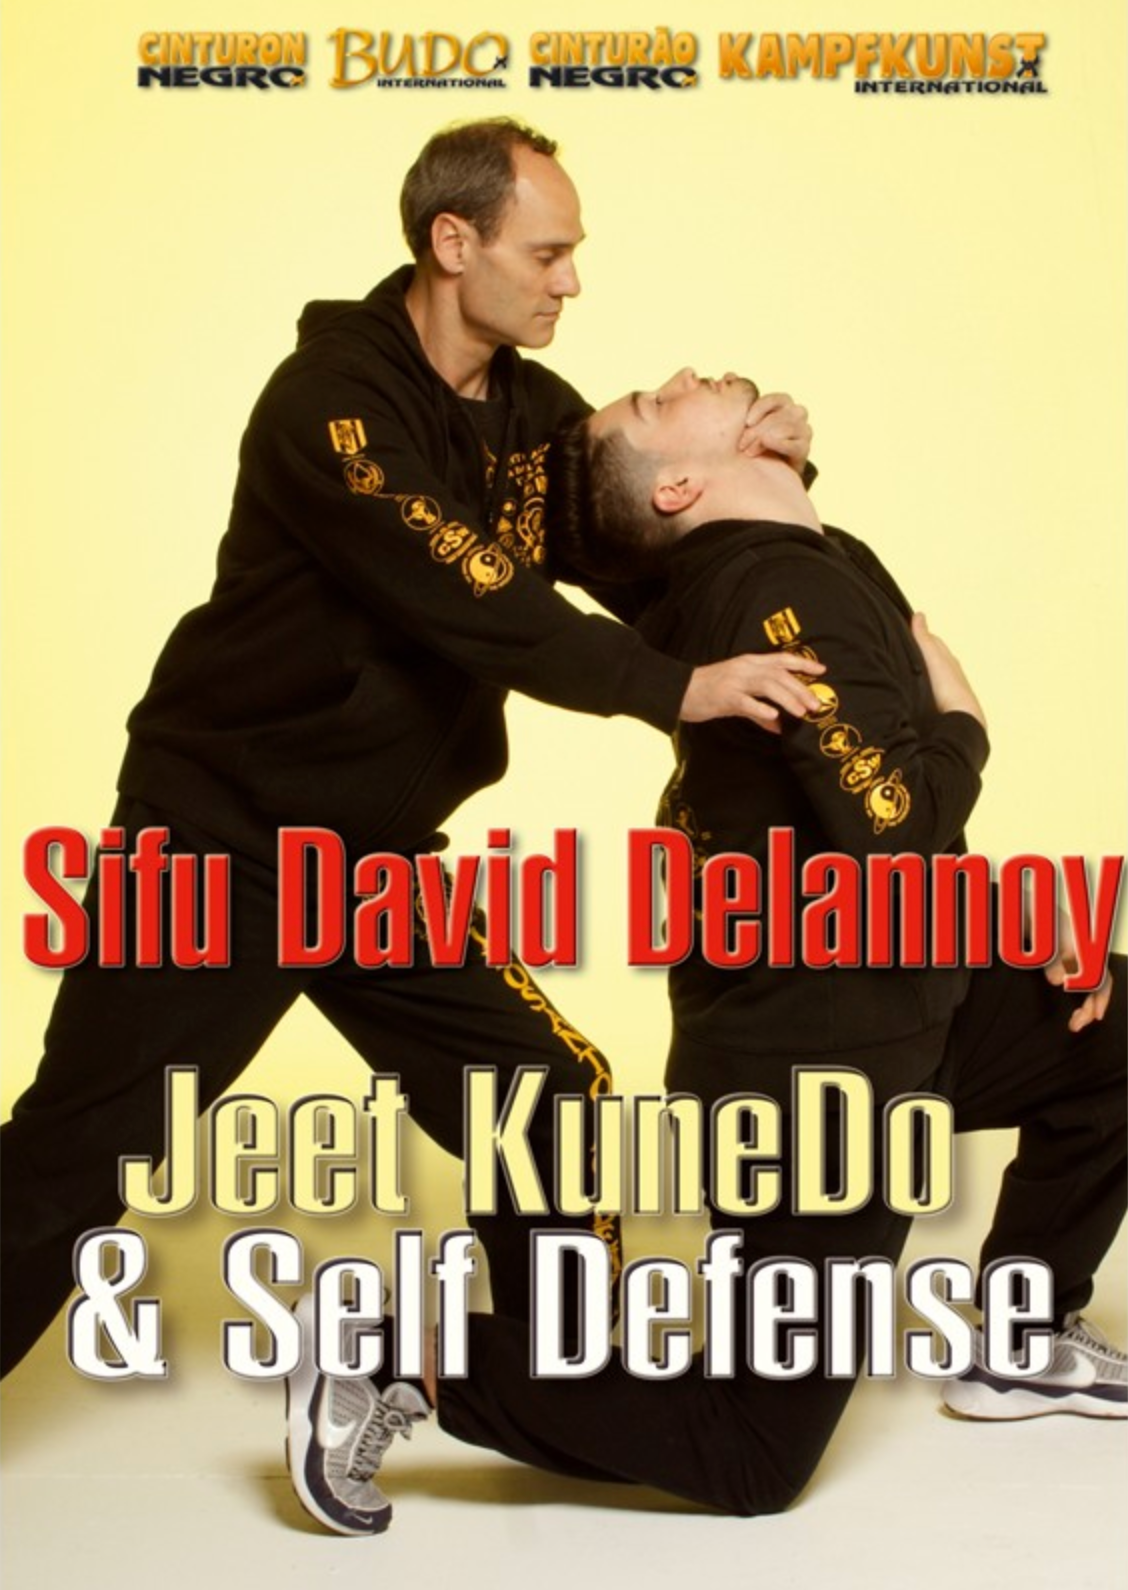 Jeet Kune Do Self Defense DVD with David Delannoy - Budovideos Inc